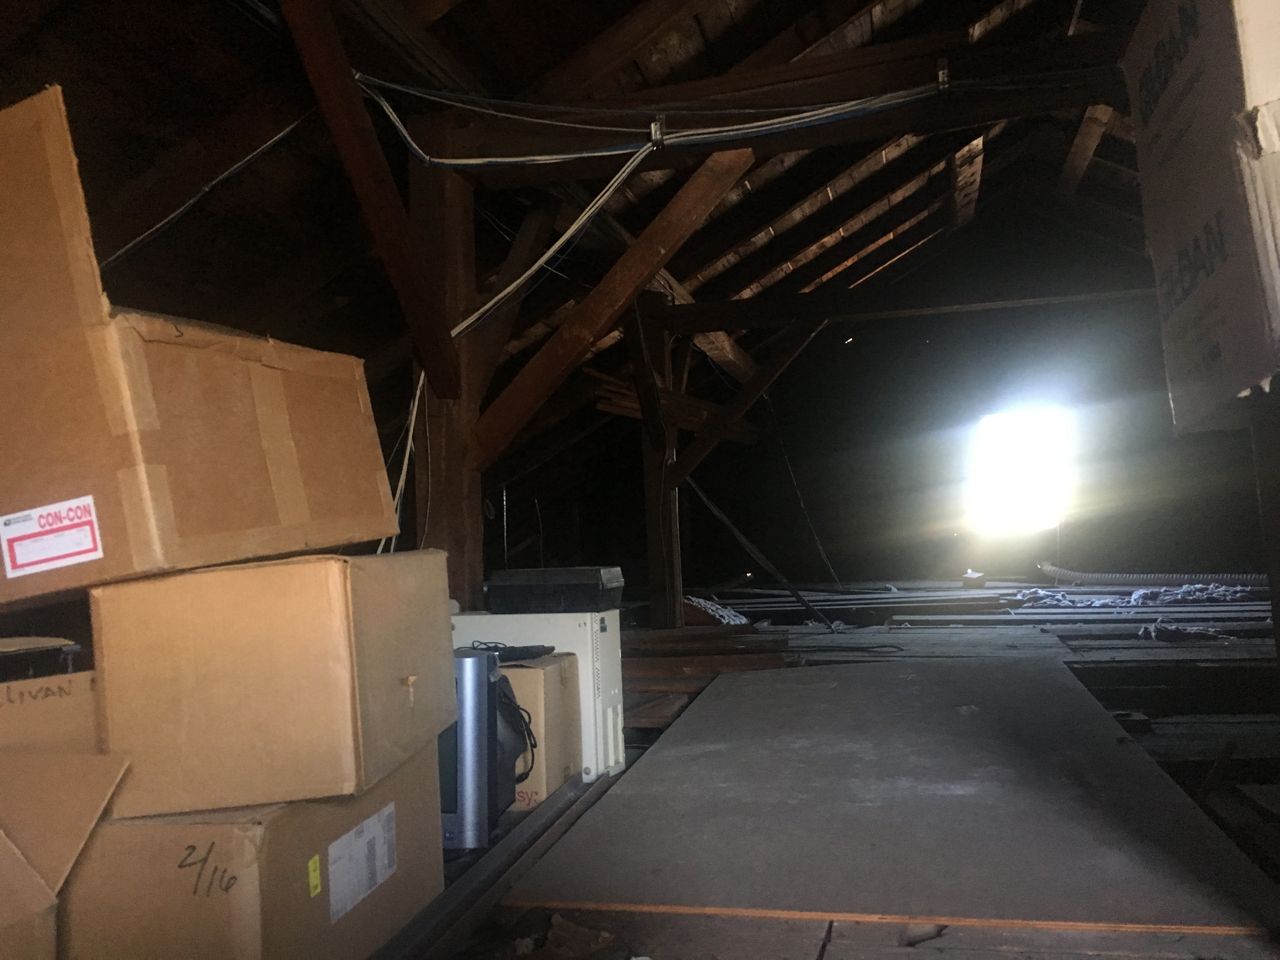 The Sullivan County Sheriff's Patrol Office's attic